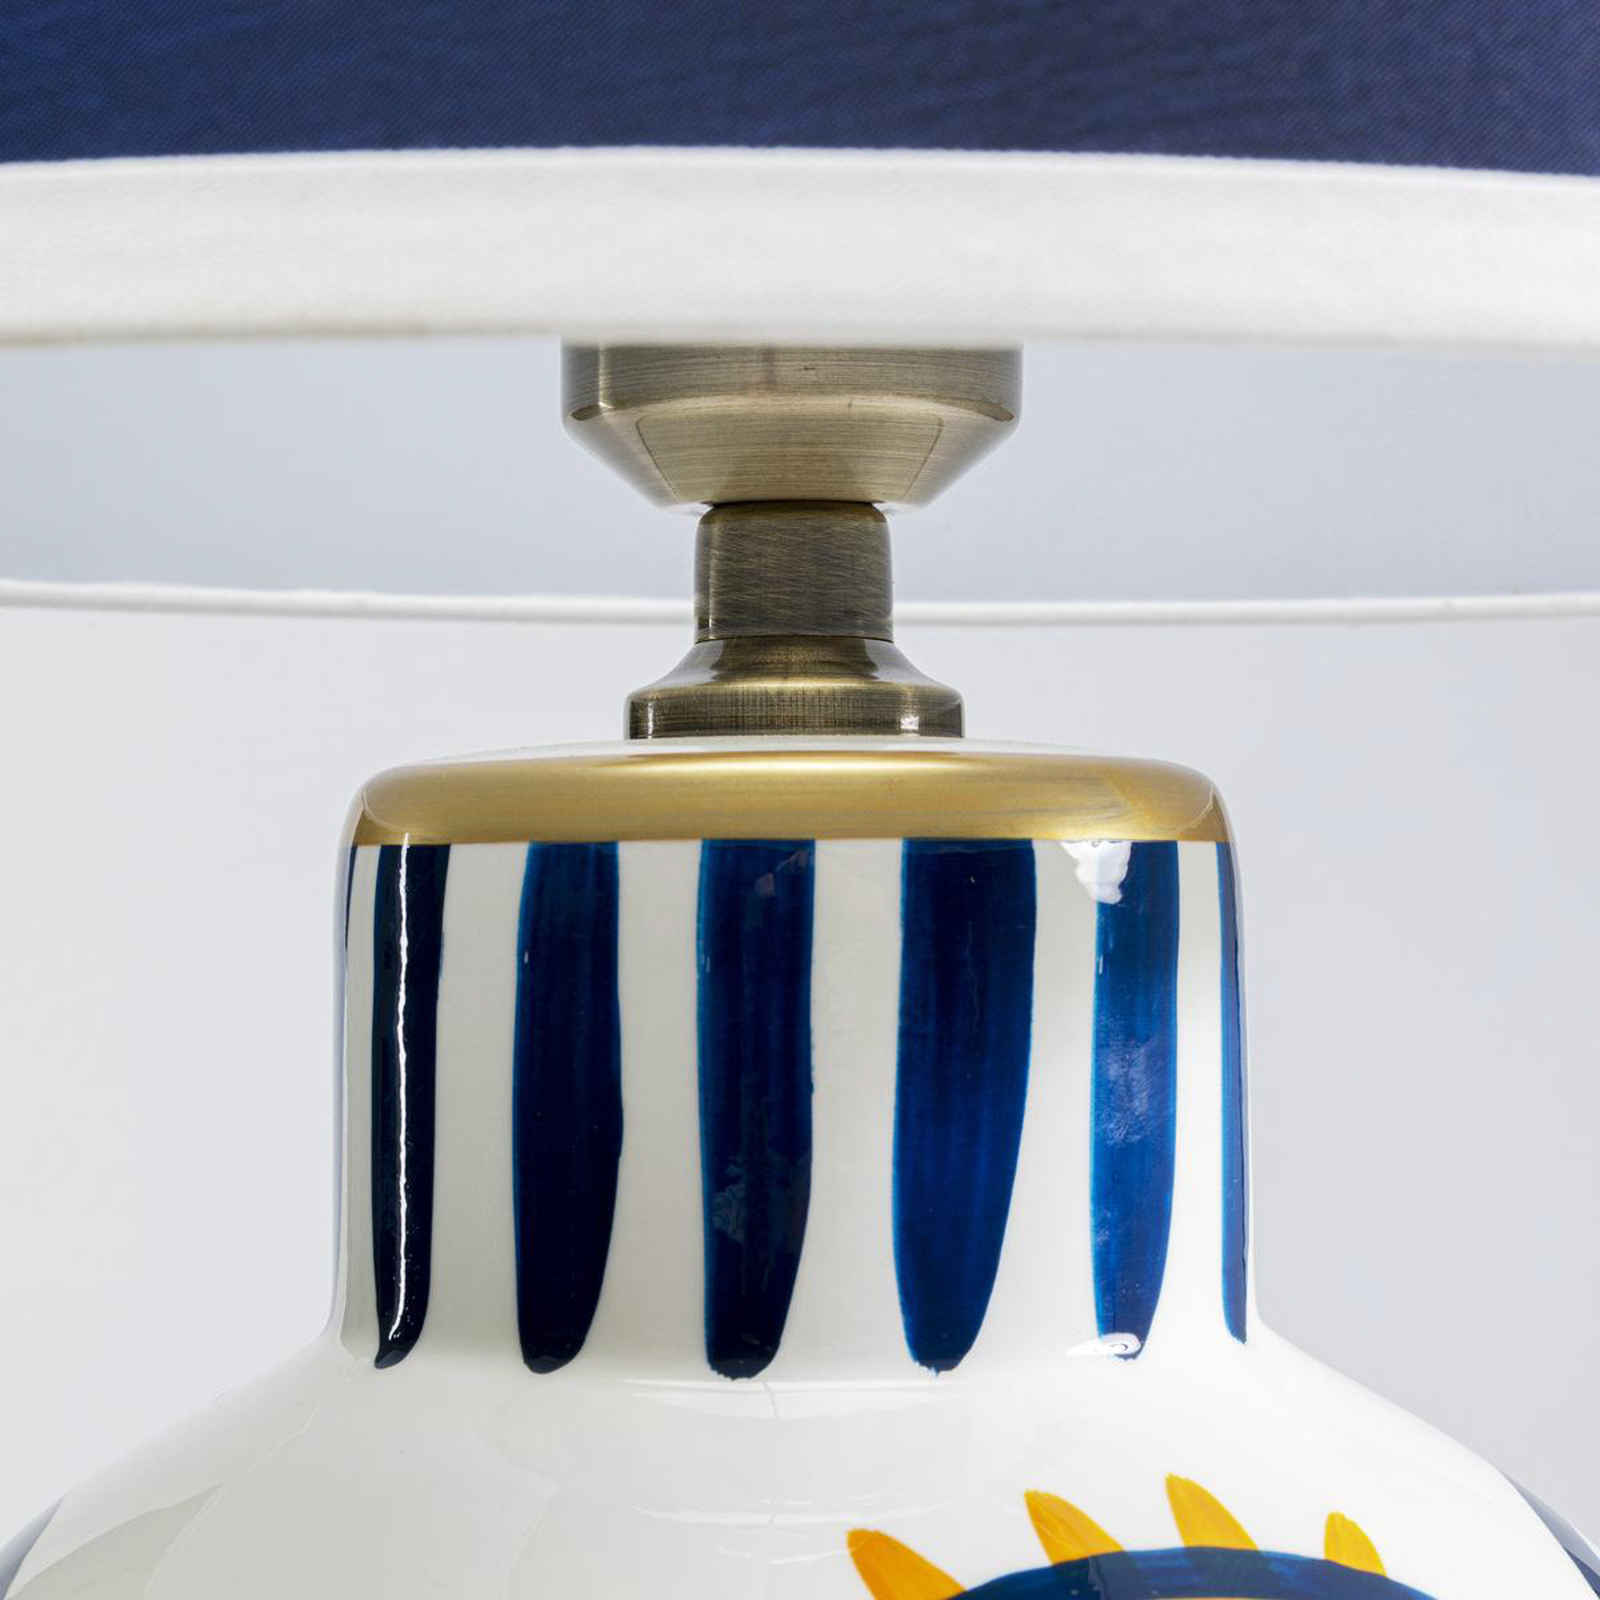 Stolná lampa KARE Two Face, modrá, textil, porcelán, 65 cm